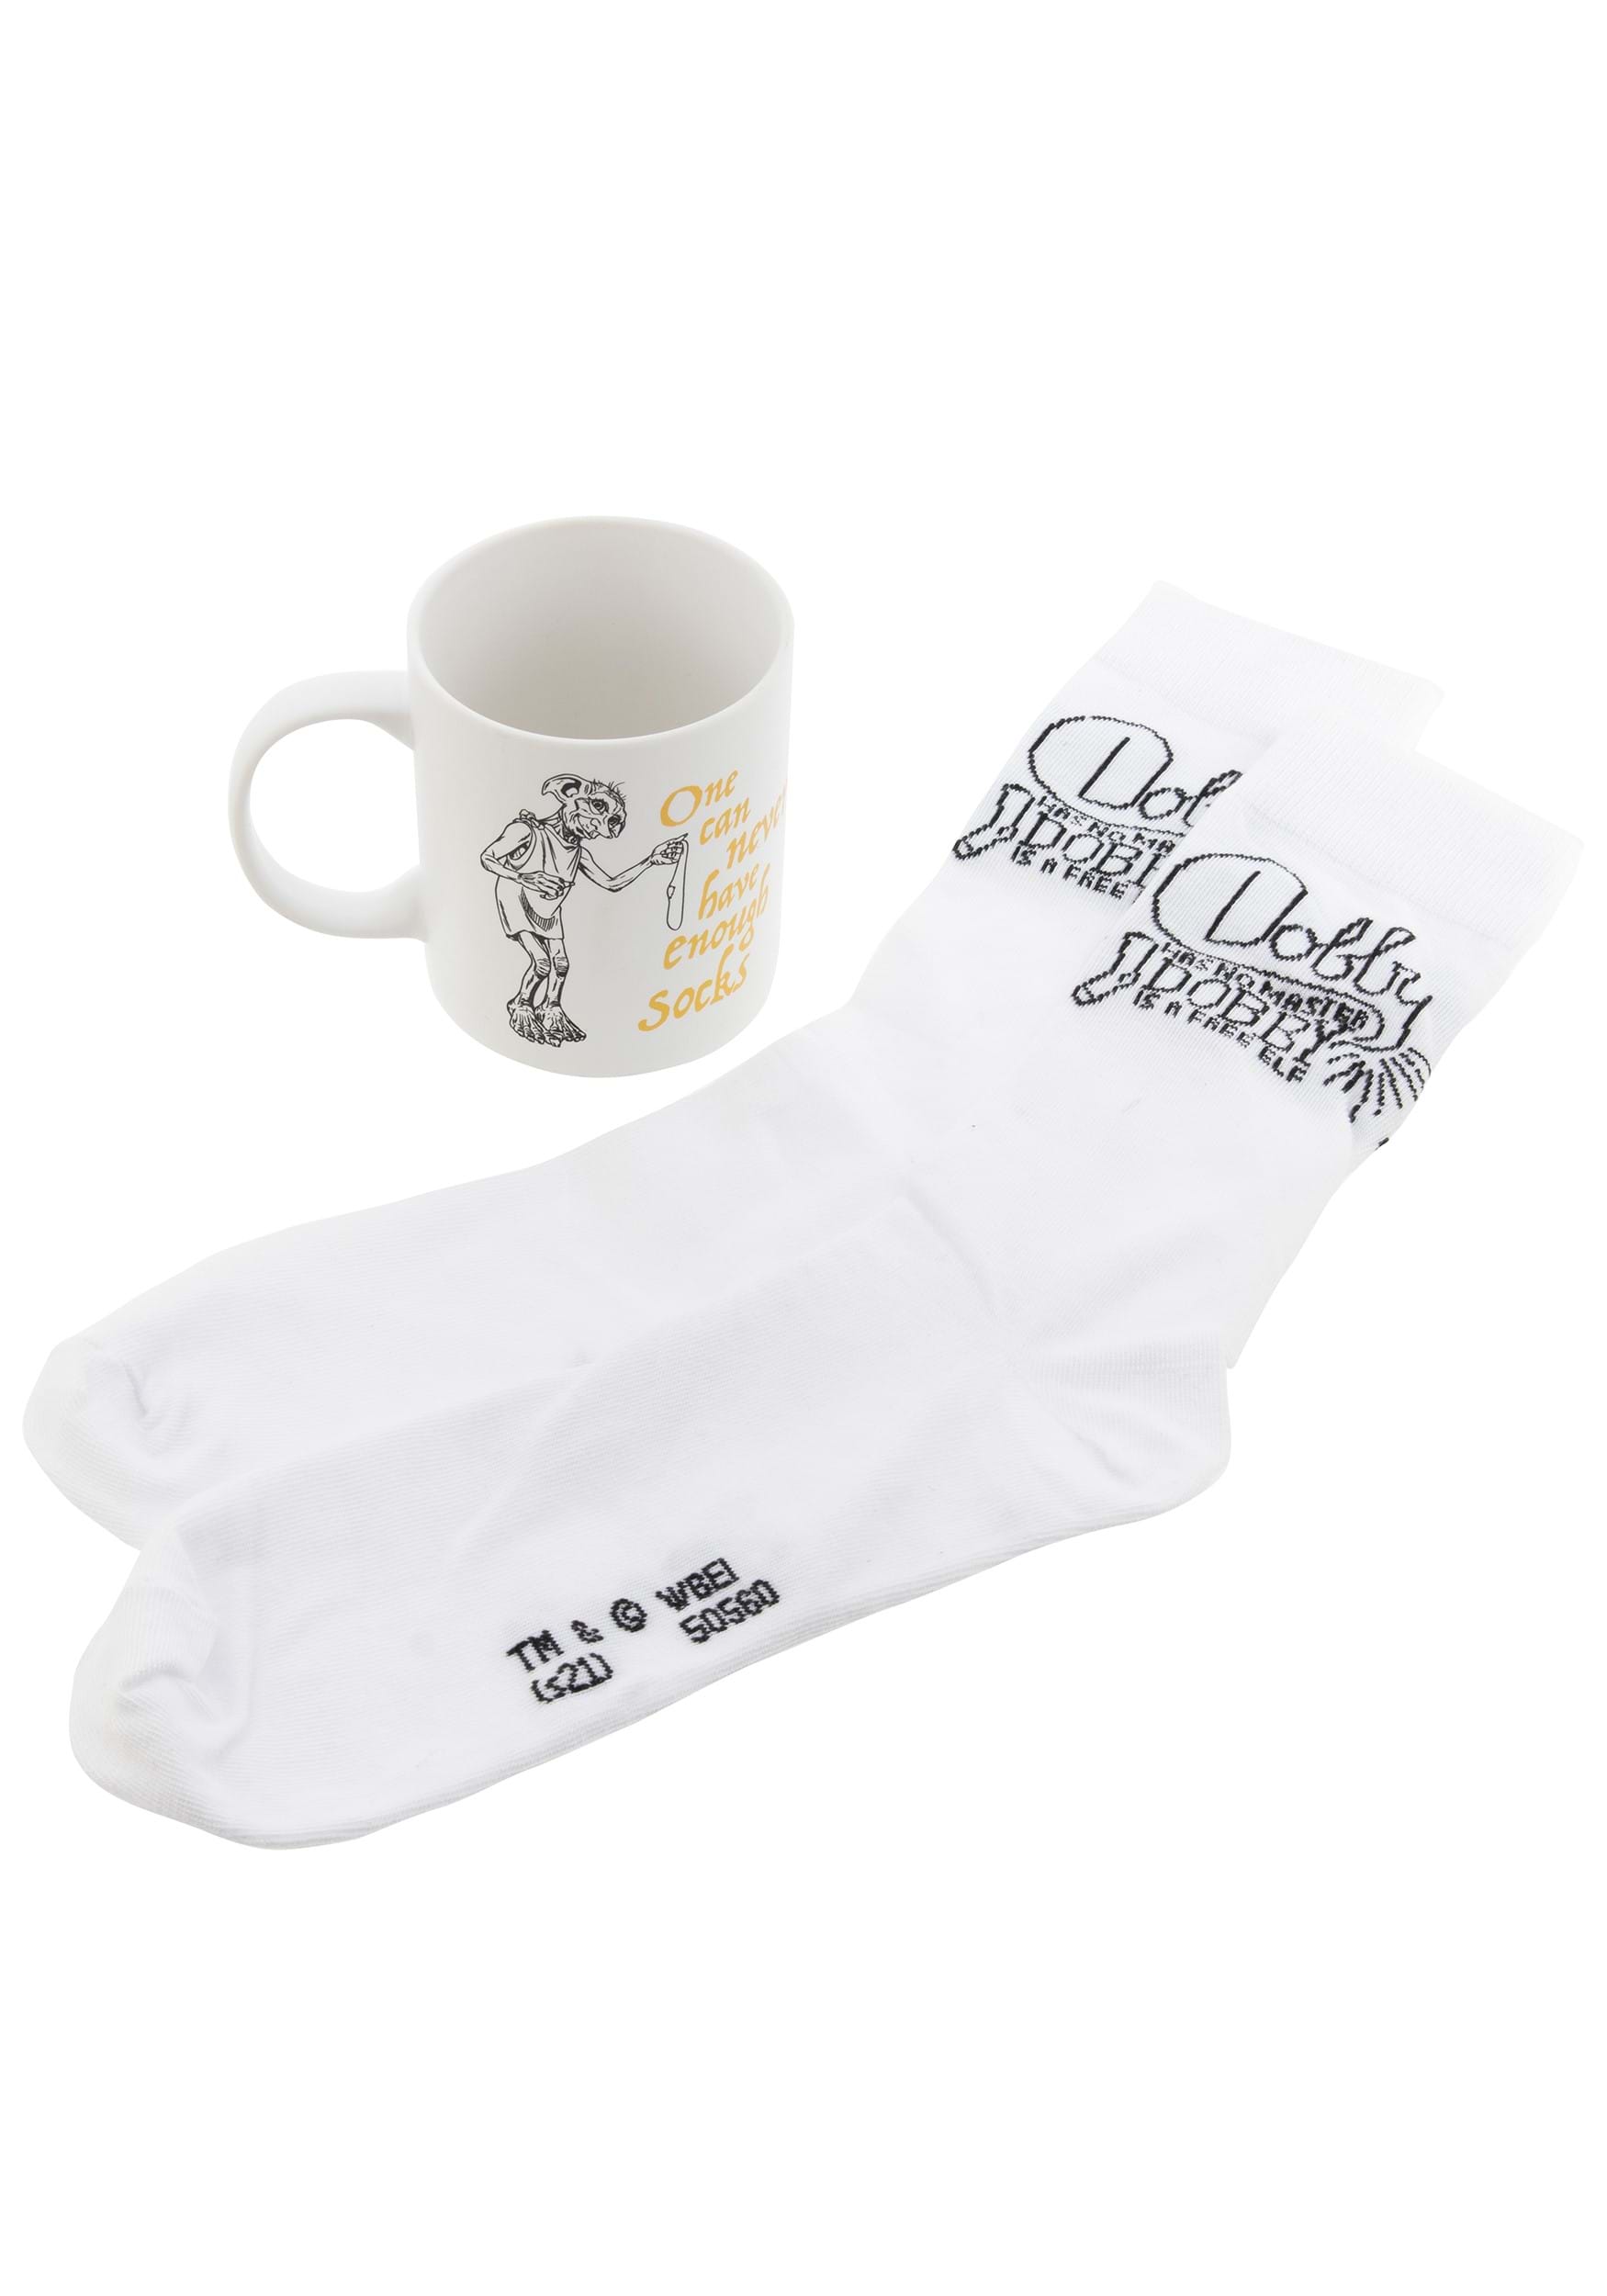 https://images.fun.com/products/81303/1-1/dobby-mug-and-socks-set.jpg